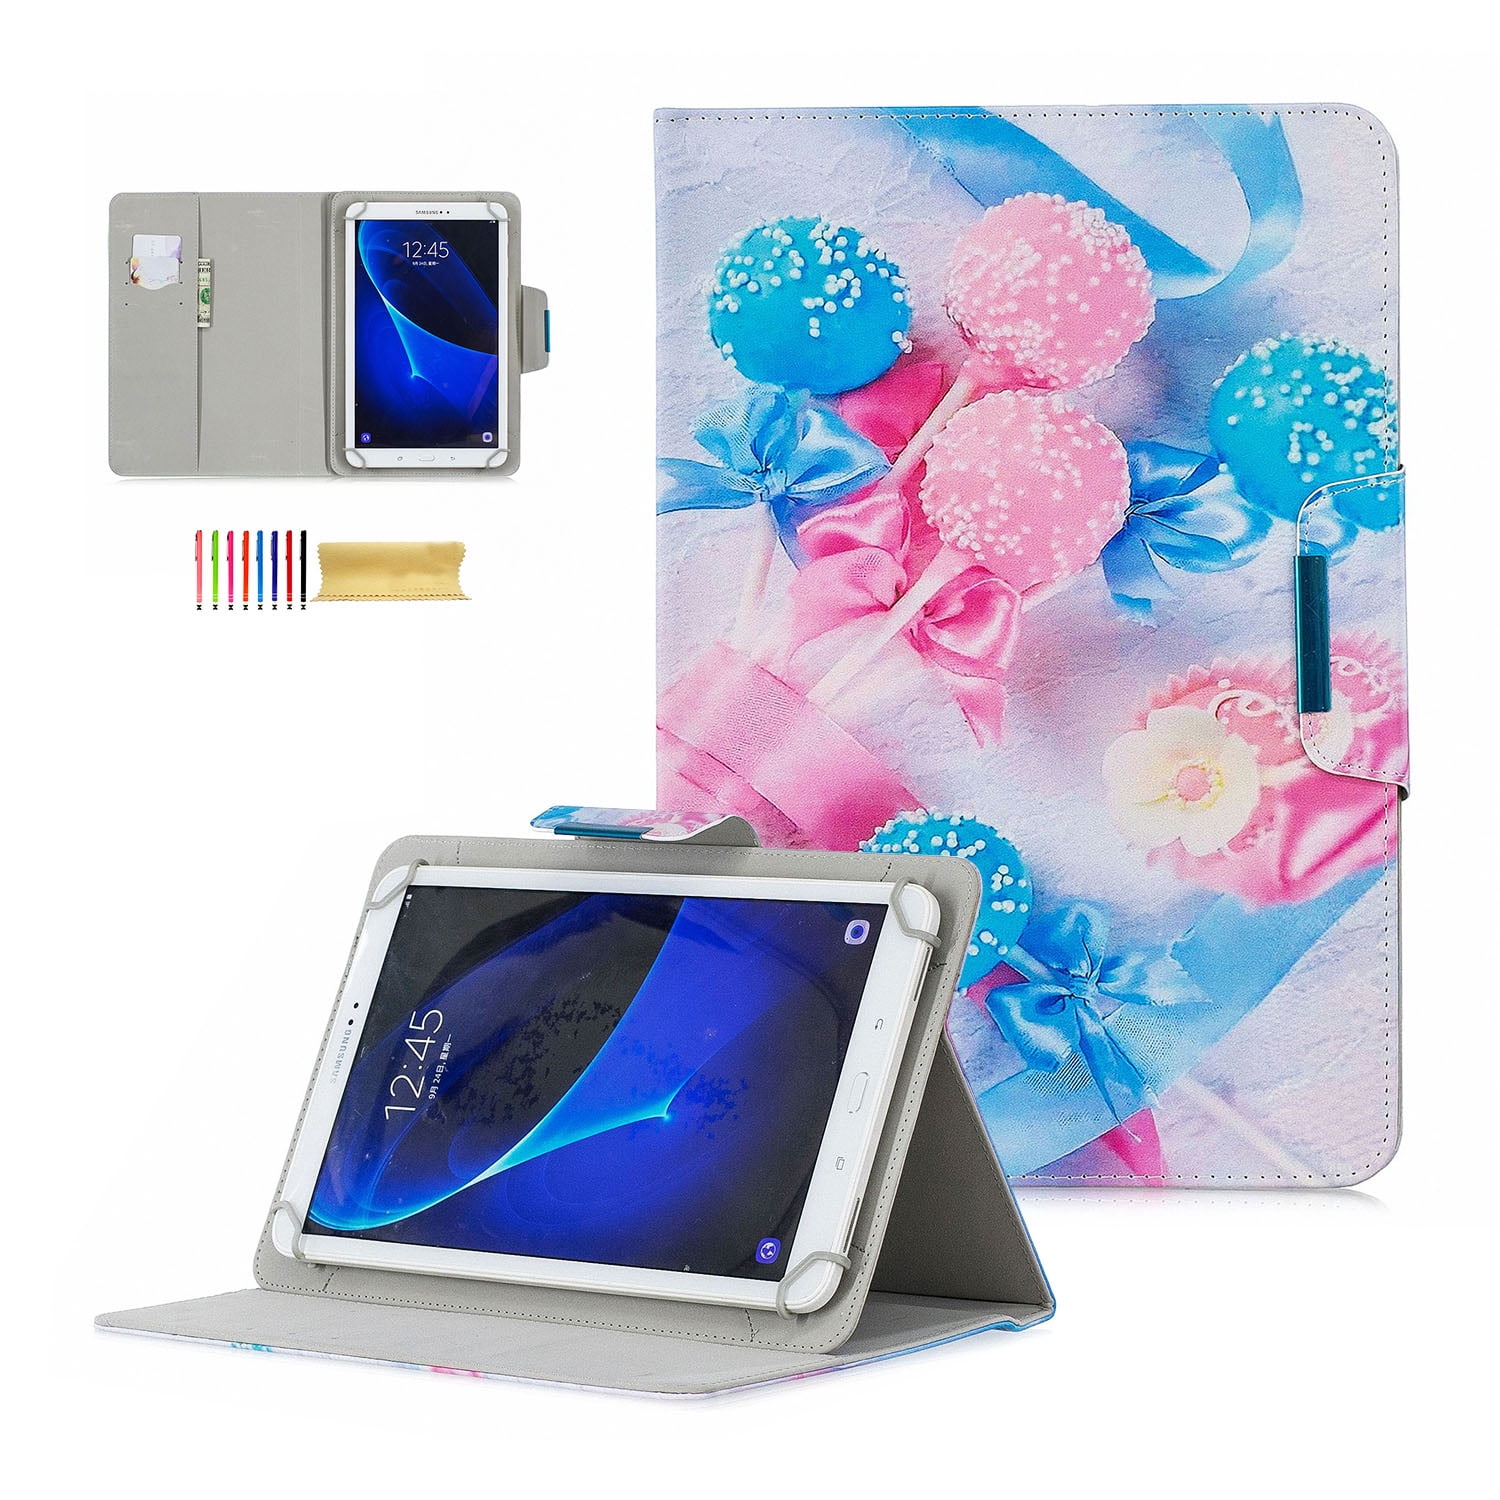 Screen Protector for Hisense Sero 8 E2281 Tablet TPU Gel Skin Cover Case 